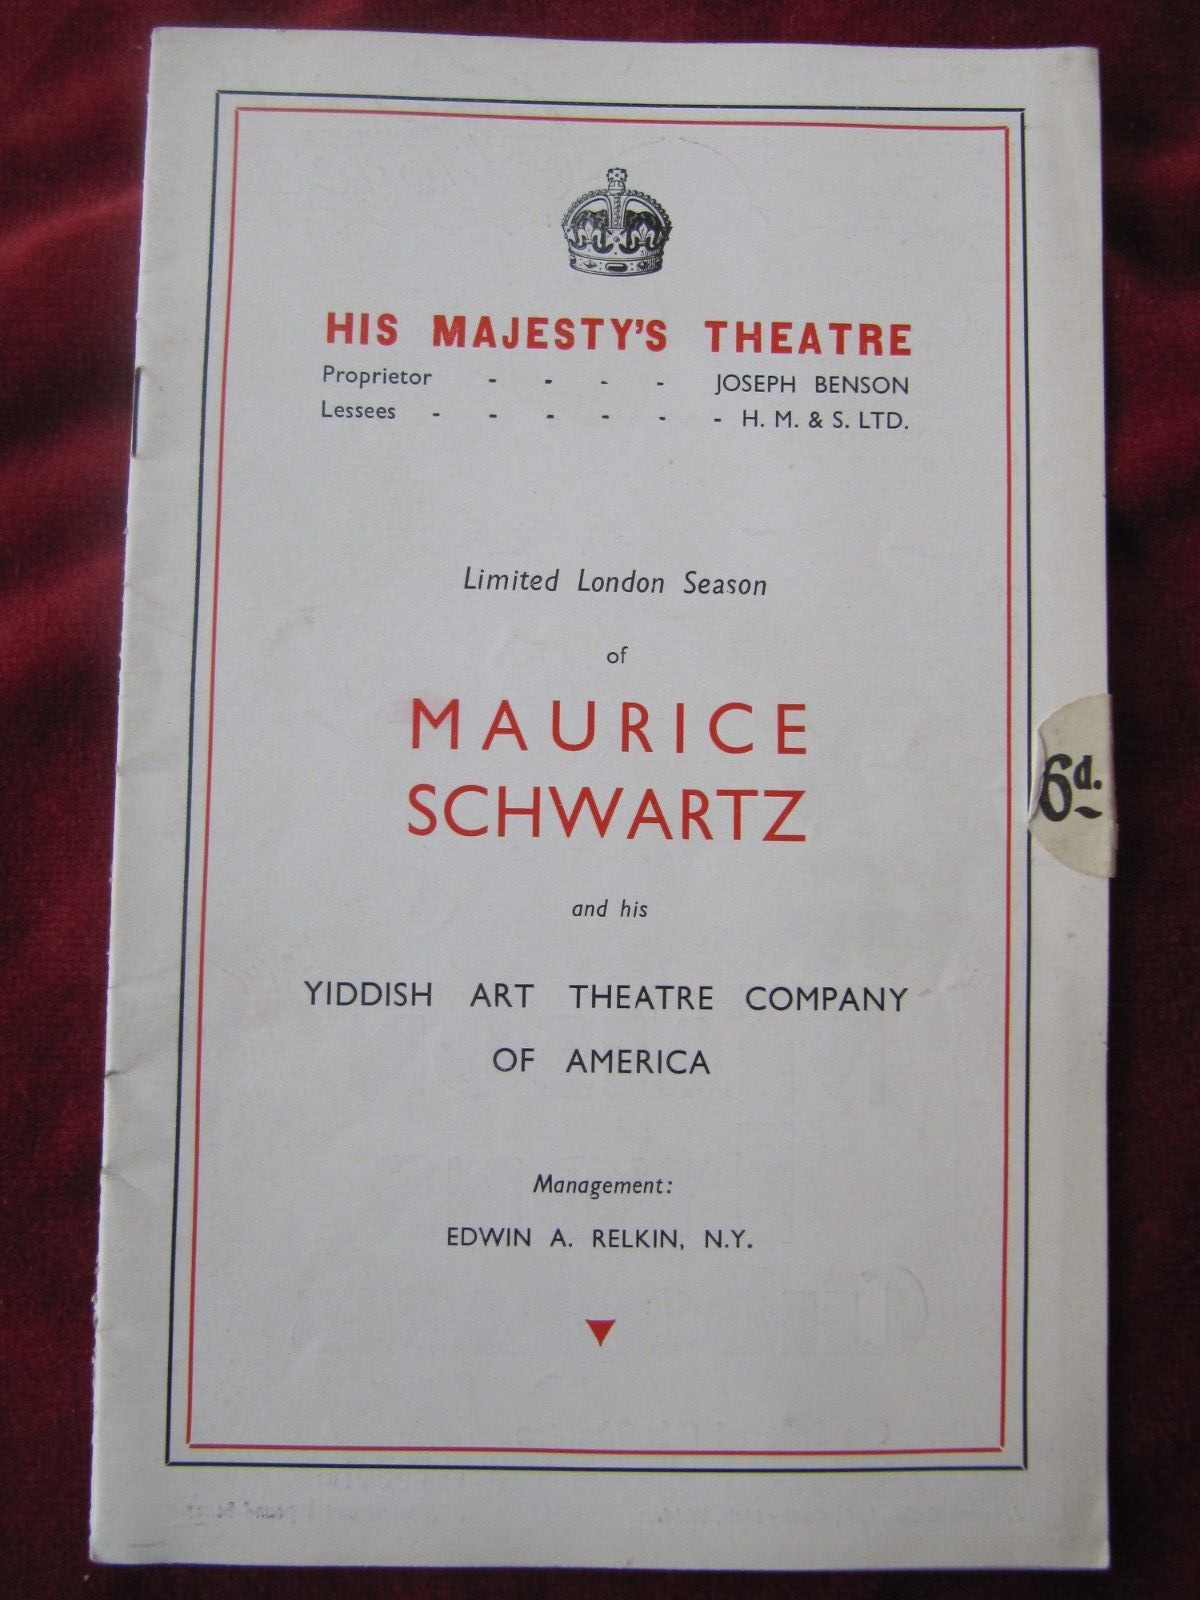 YOSHE KALB at His Majesty's Theatre (1933) Yiddish Art Theatre Company - RARE